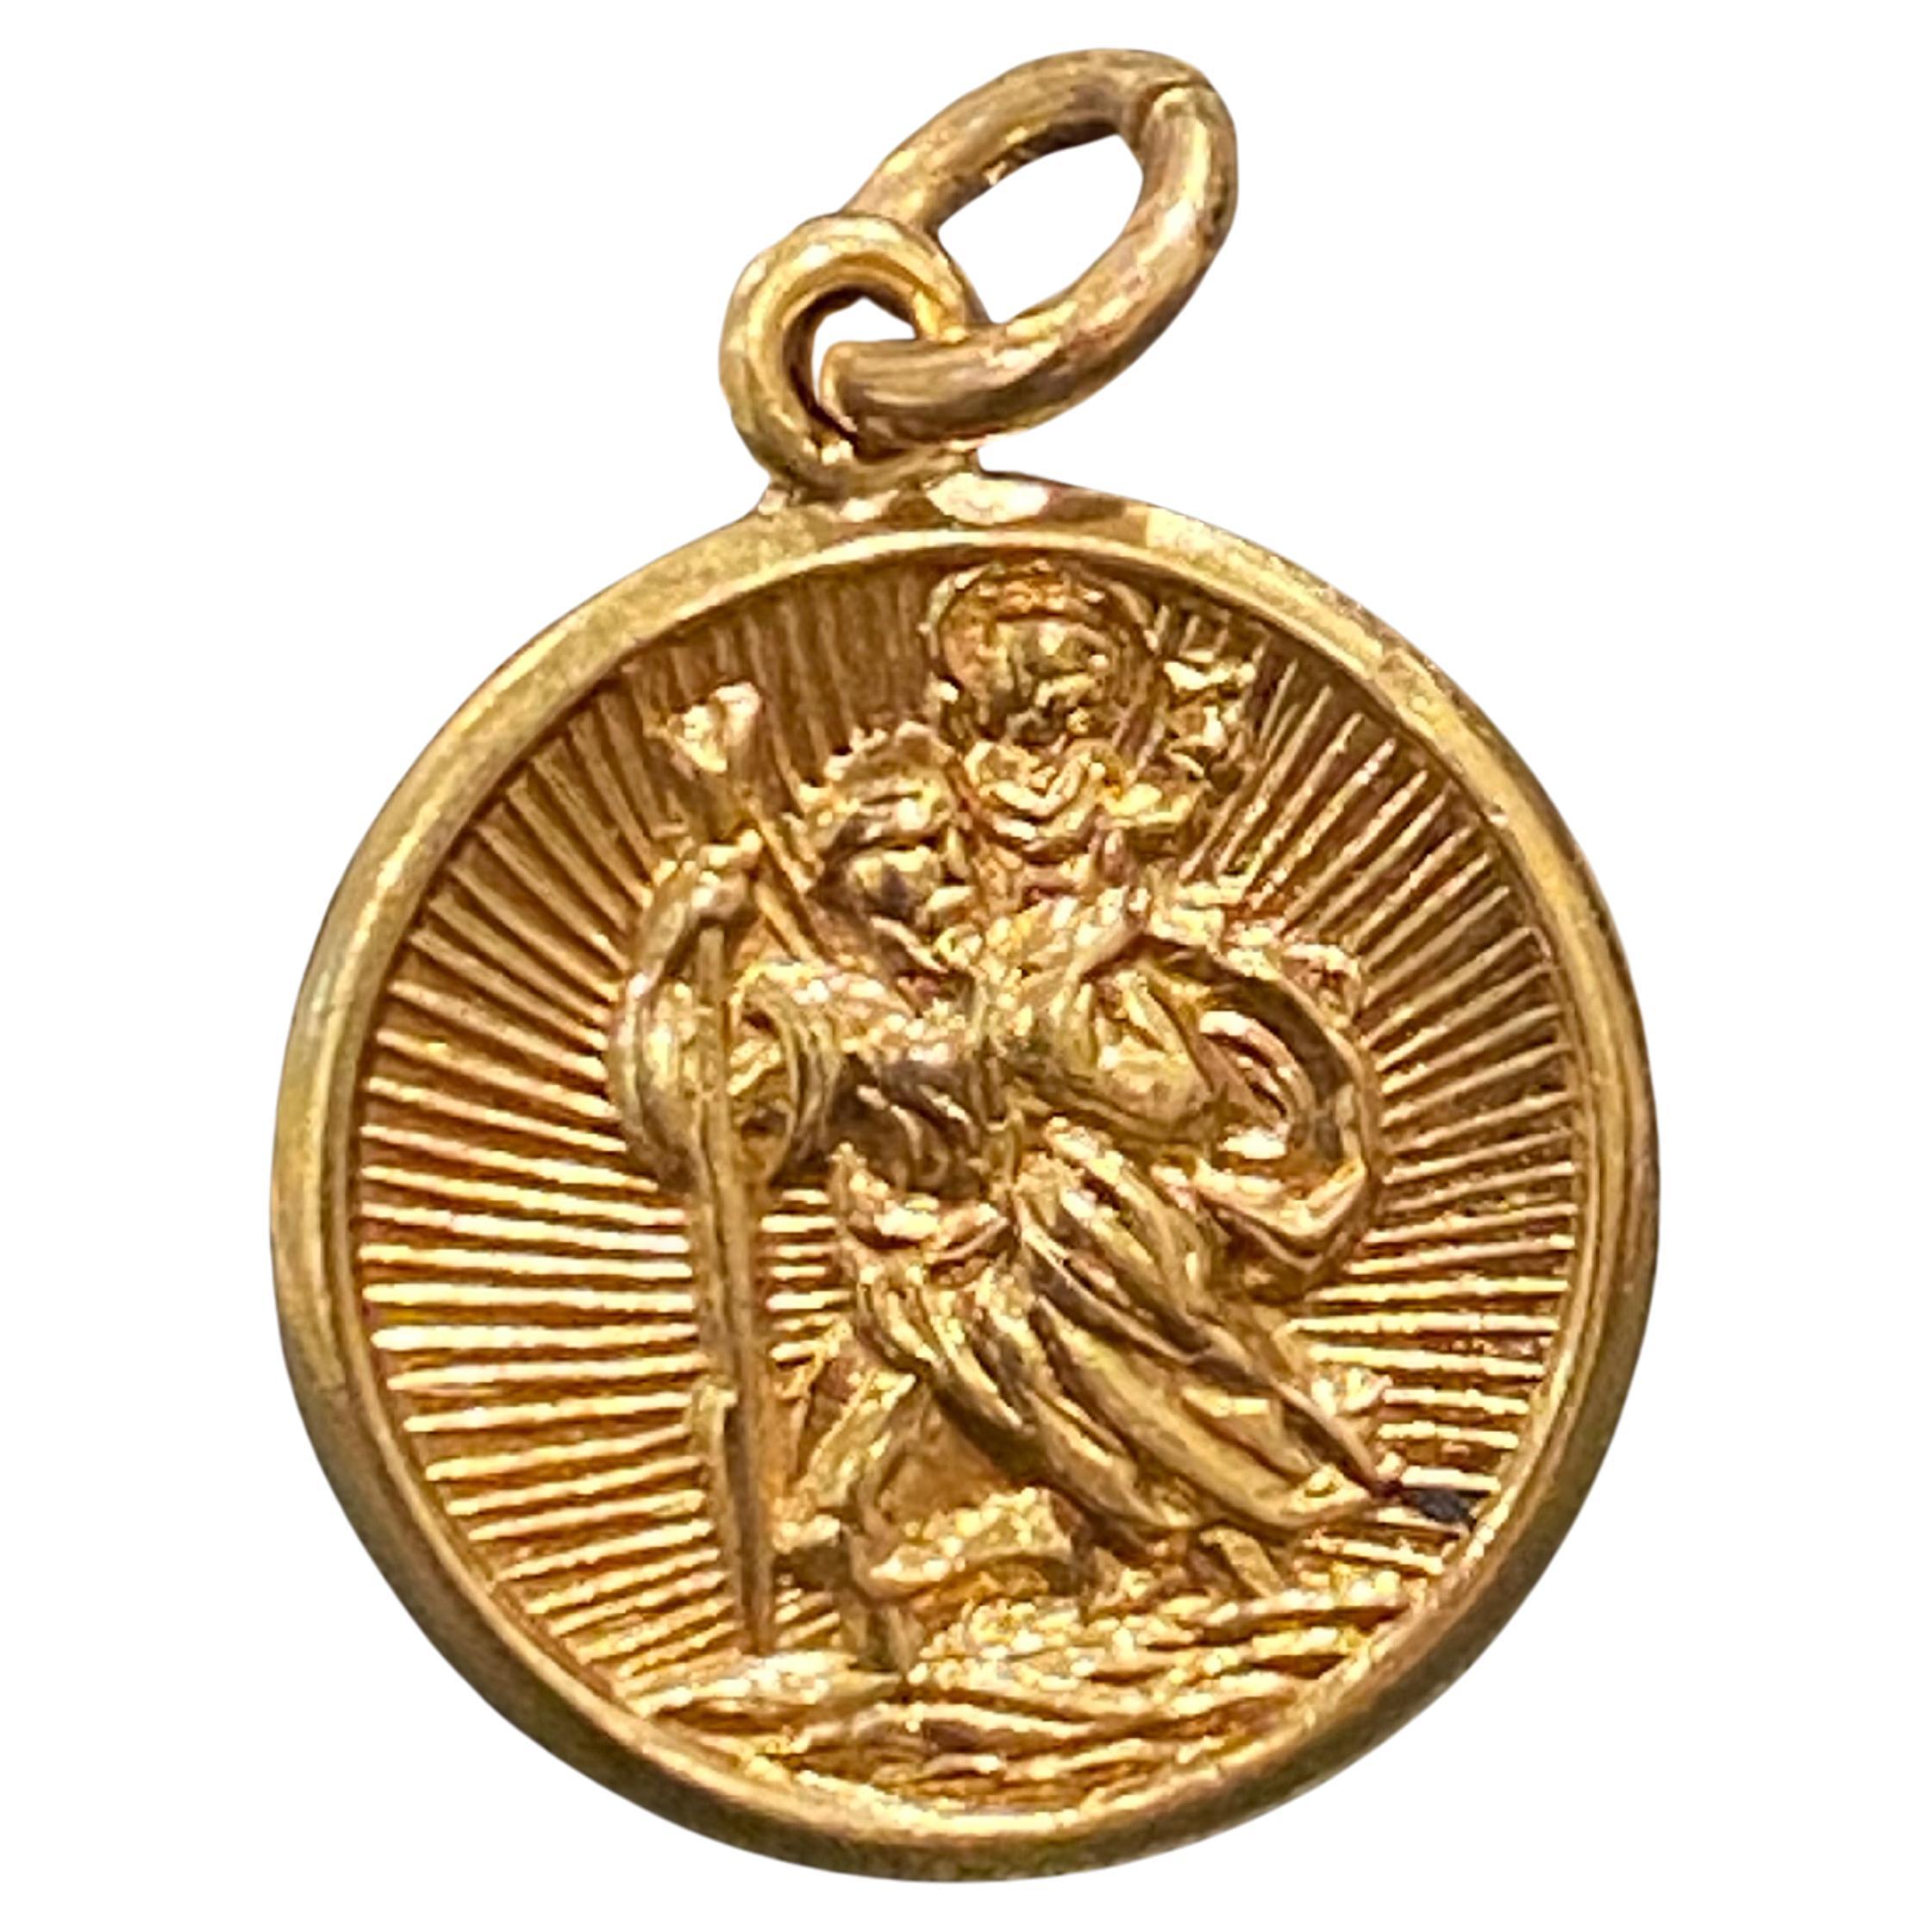 Superb 9K Yellow Gold Vintage Poseidon Olympian Coin Charm. England, c1962.